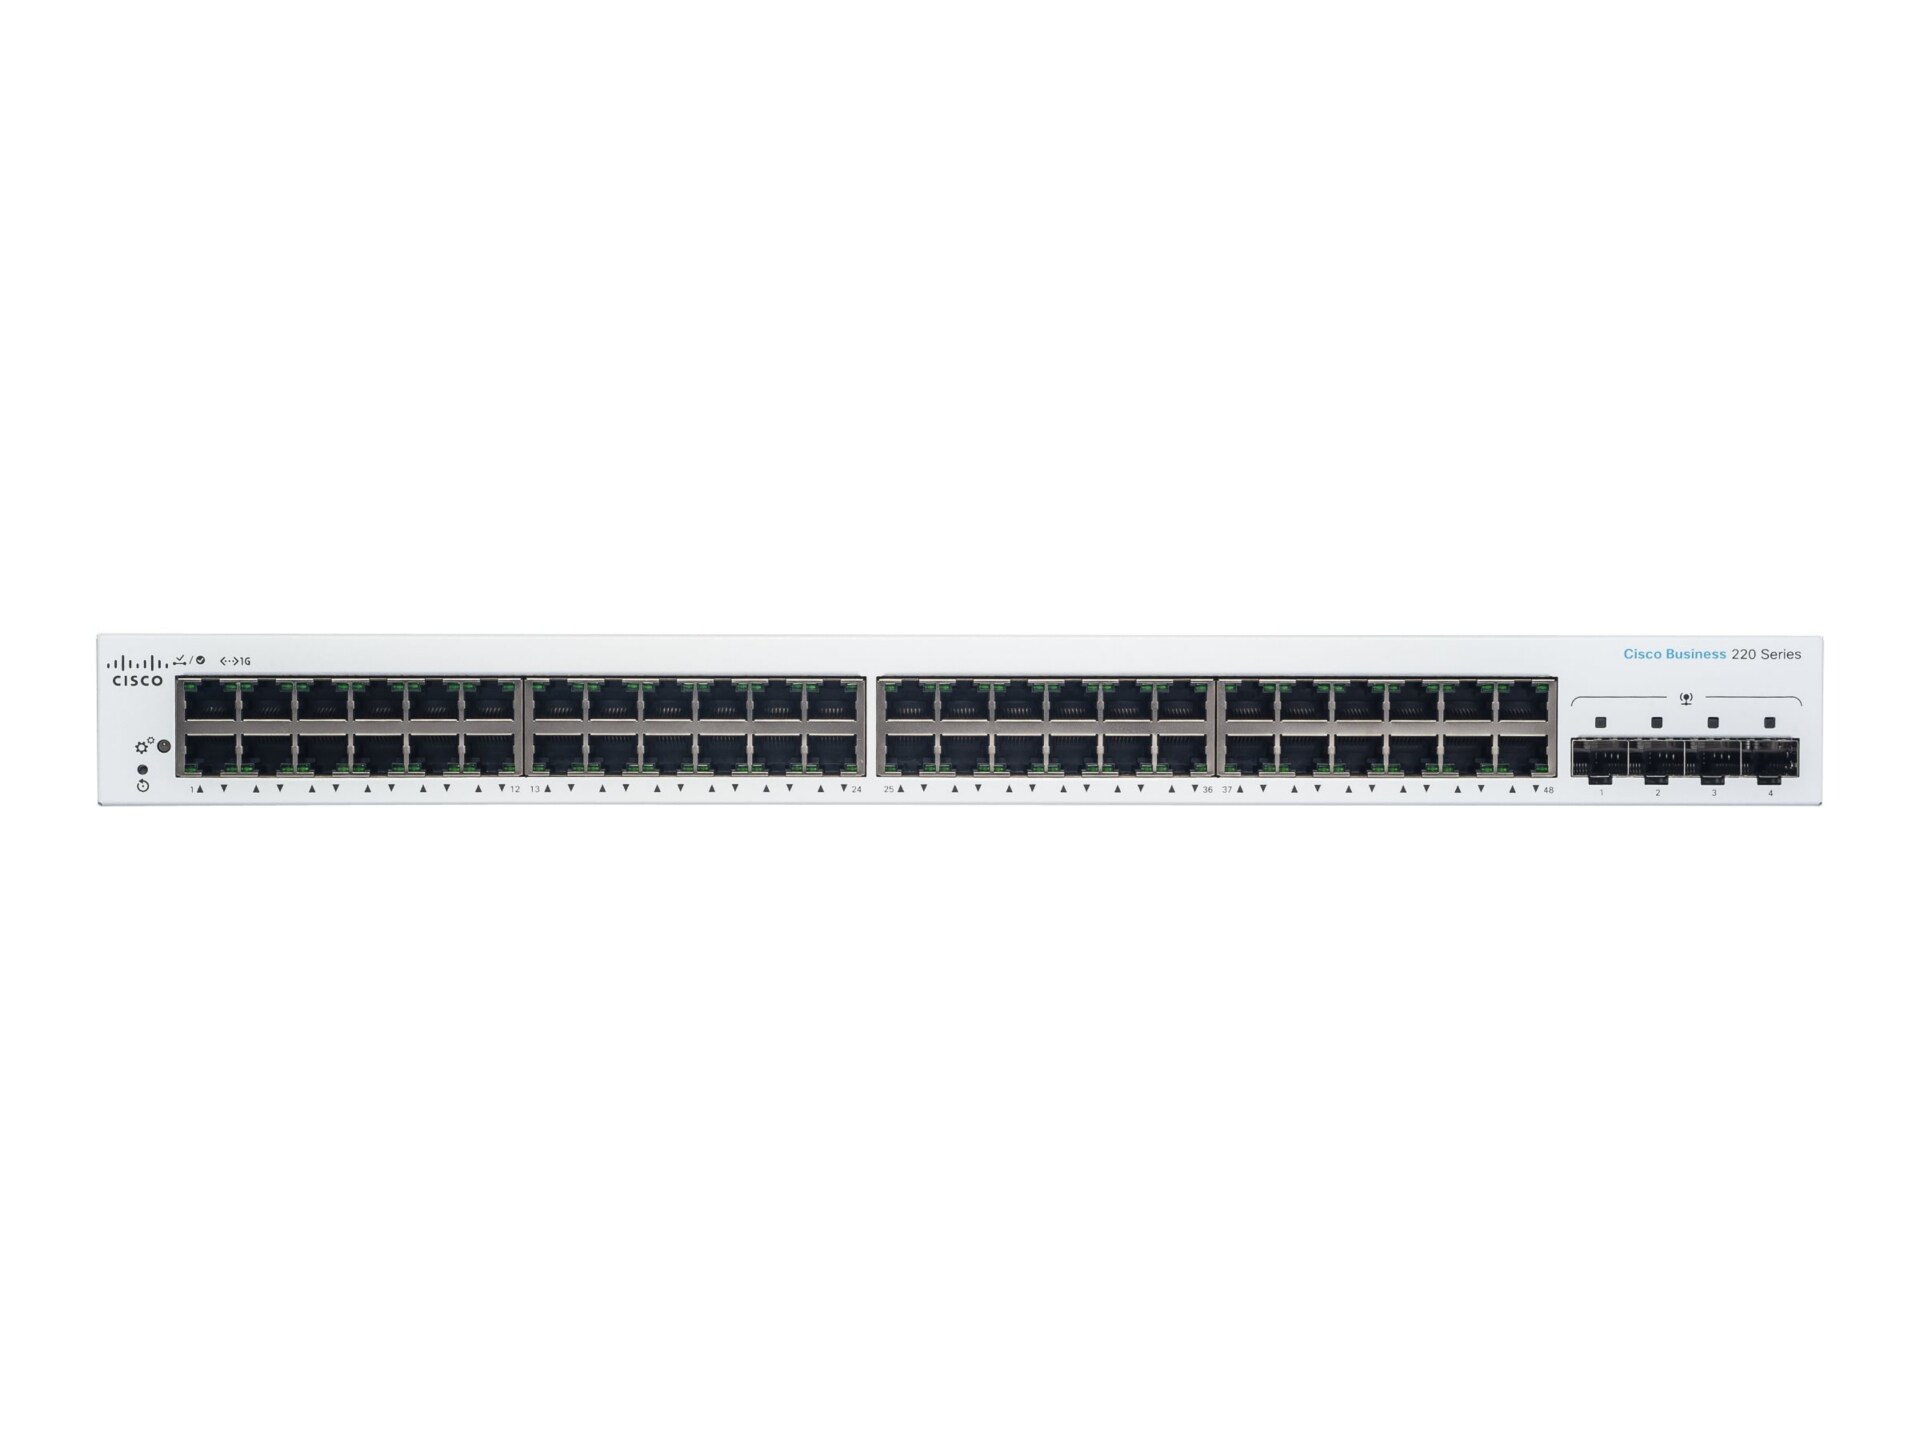 Cisco Business 220 Series CBS220-48T-4G - switch - 52 ports - smart - rack-